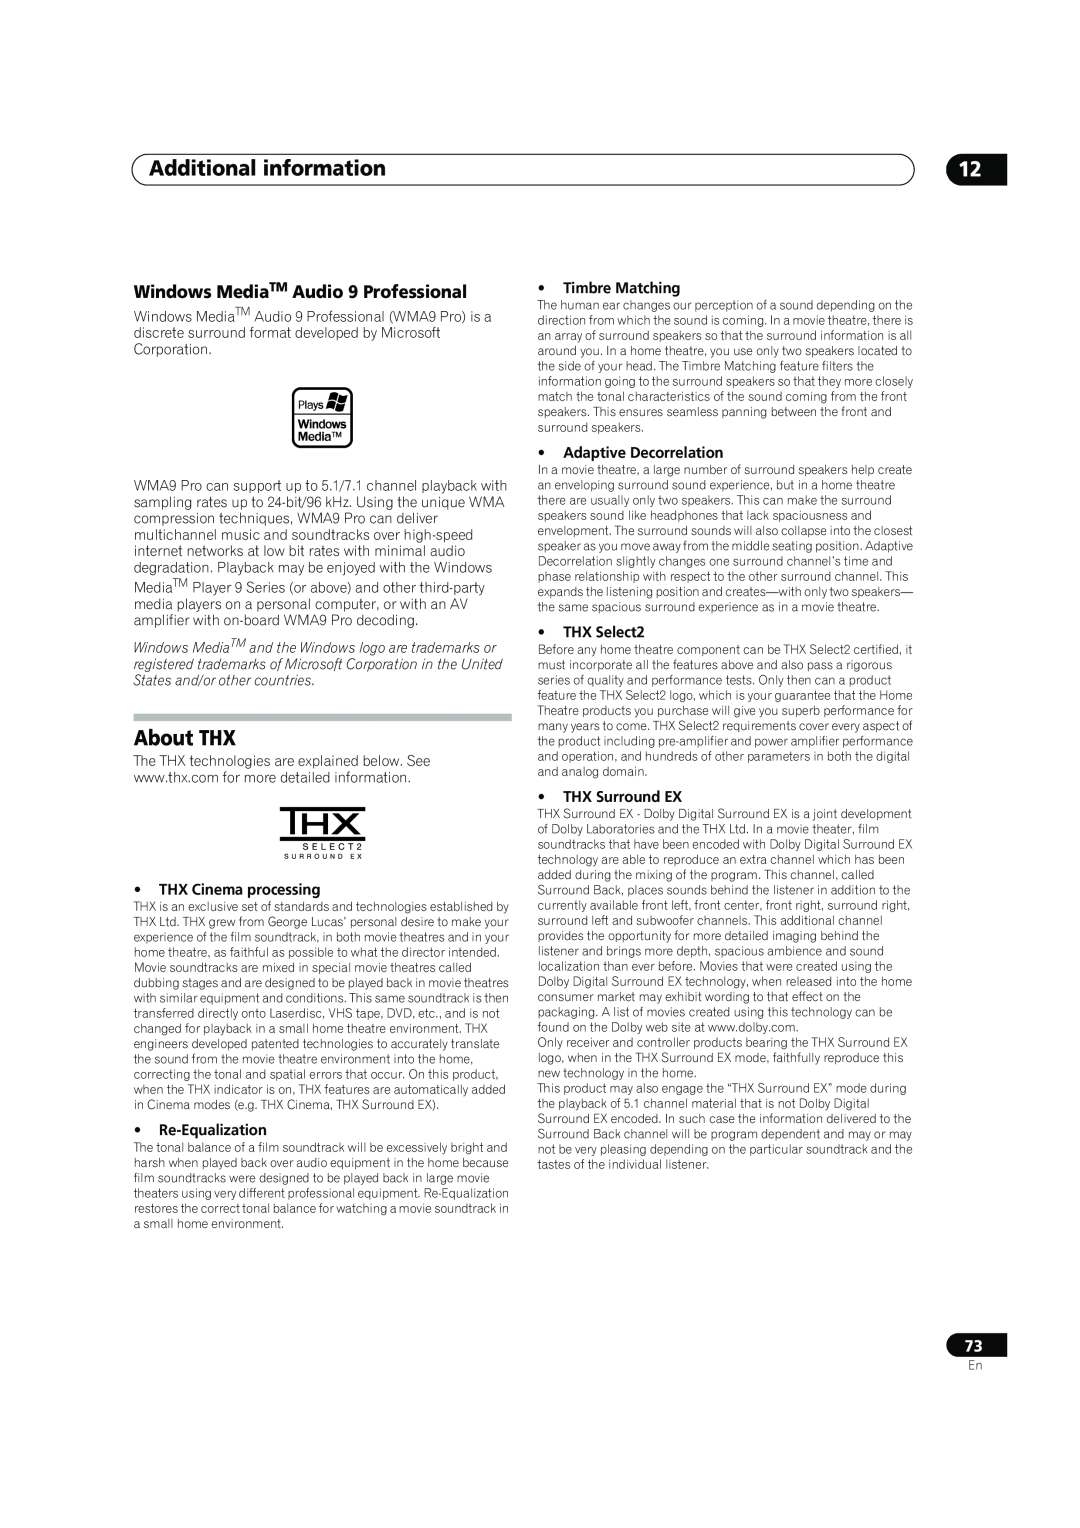 Pioneer VSX-90TXV operating instructions About THX, Windows MediaTM Audio 9 Professional, Additional information 